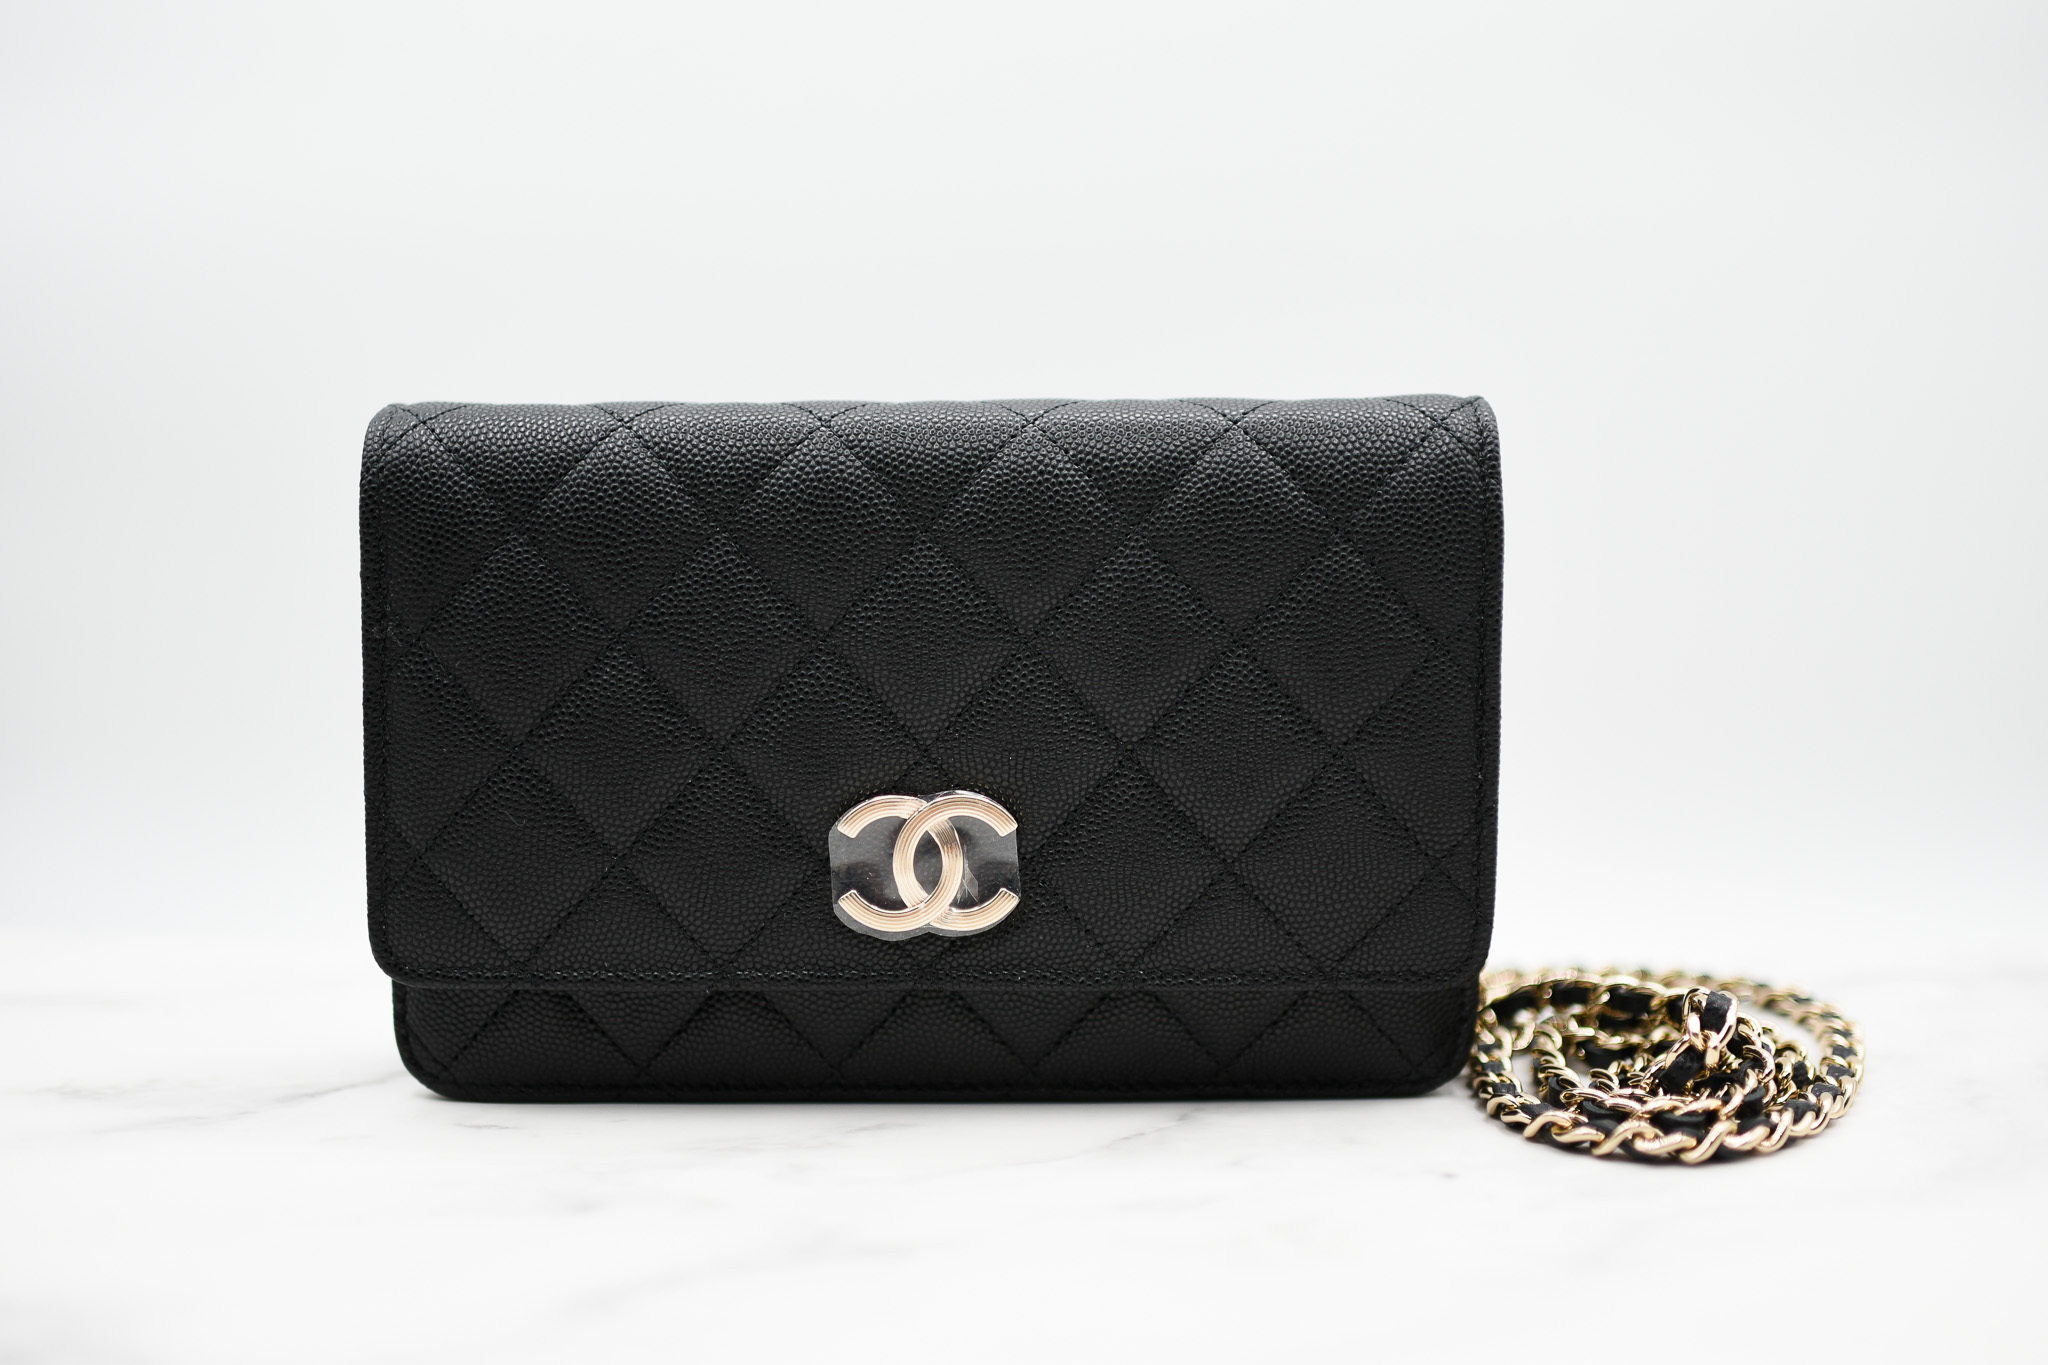 CHANEL, Bags, Chanel Black Caviar Like A Wallet Flap Bag 22c